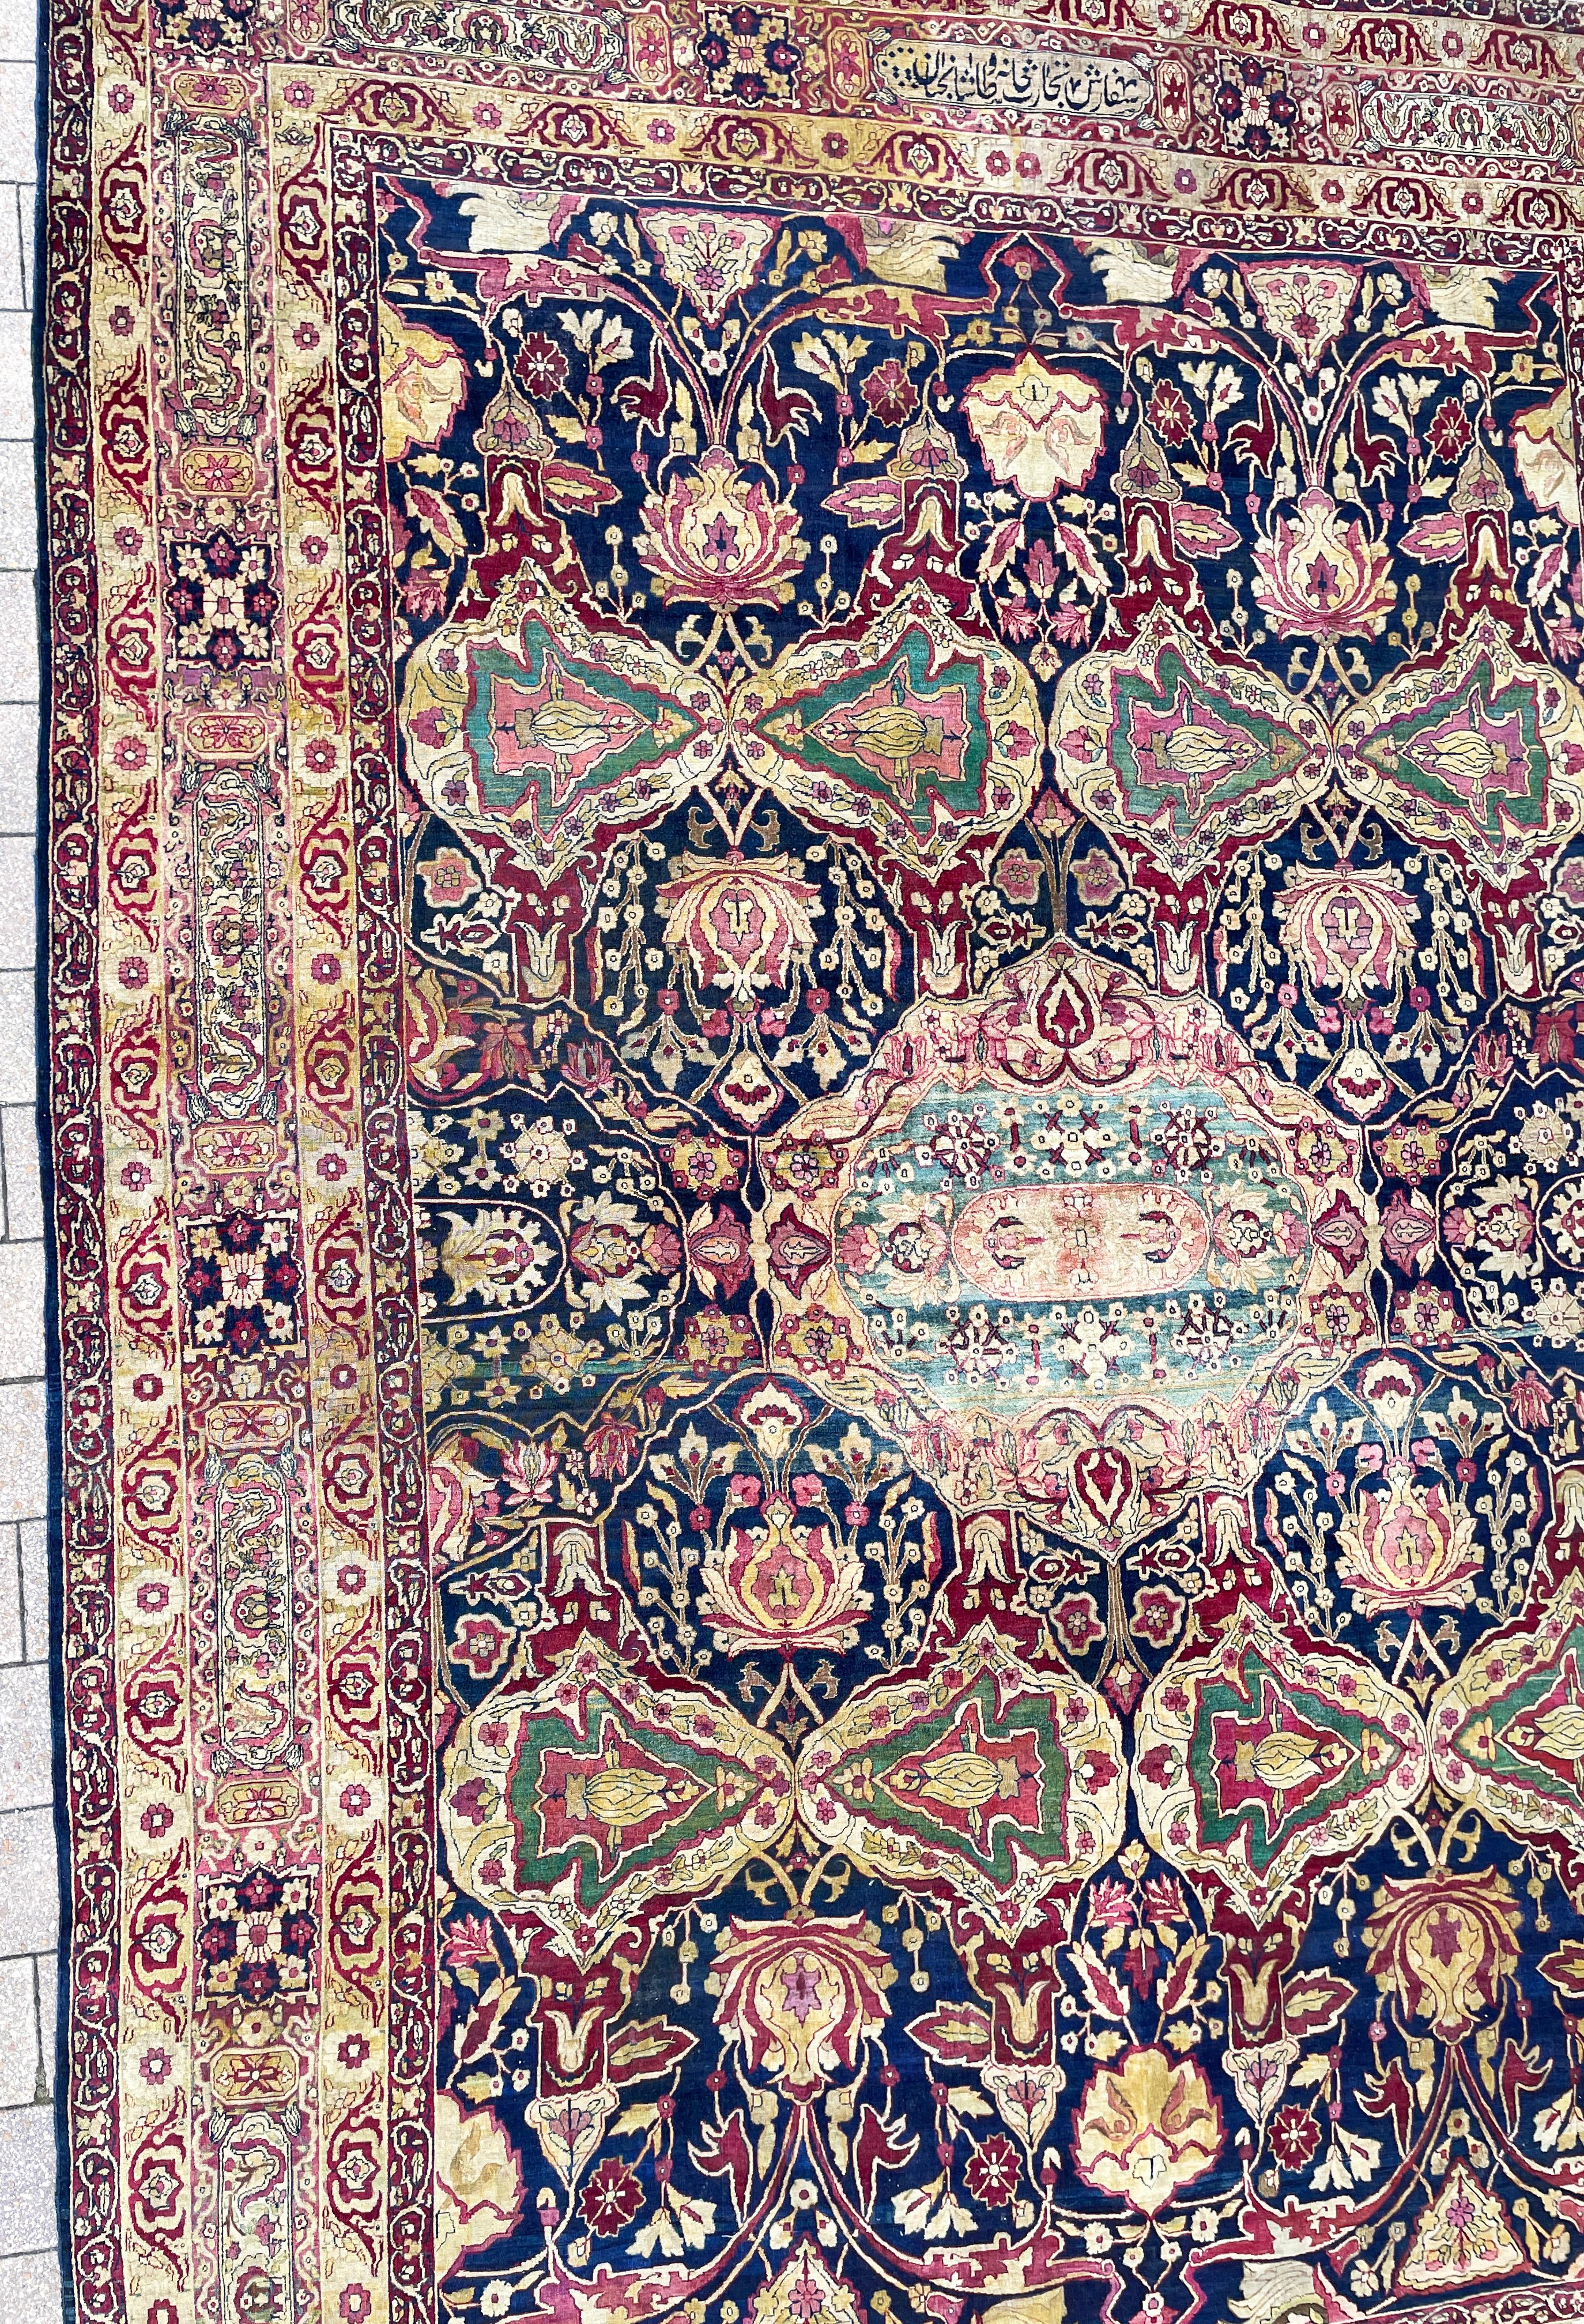 Hand-Knotted Antique Persian Kermanshah/Laver Carpet, c-1880's, A sign rug  For Sale